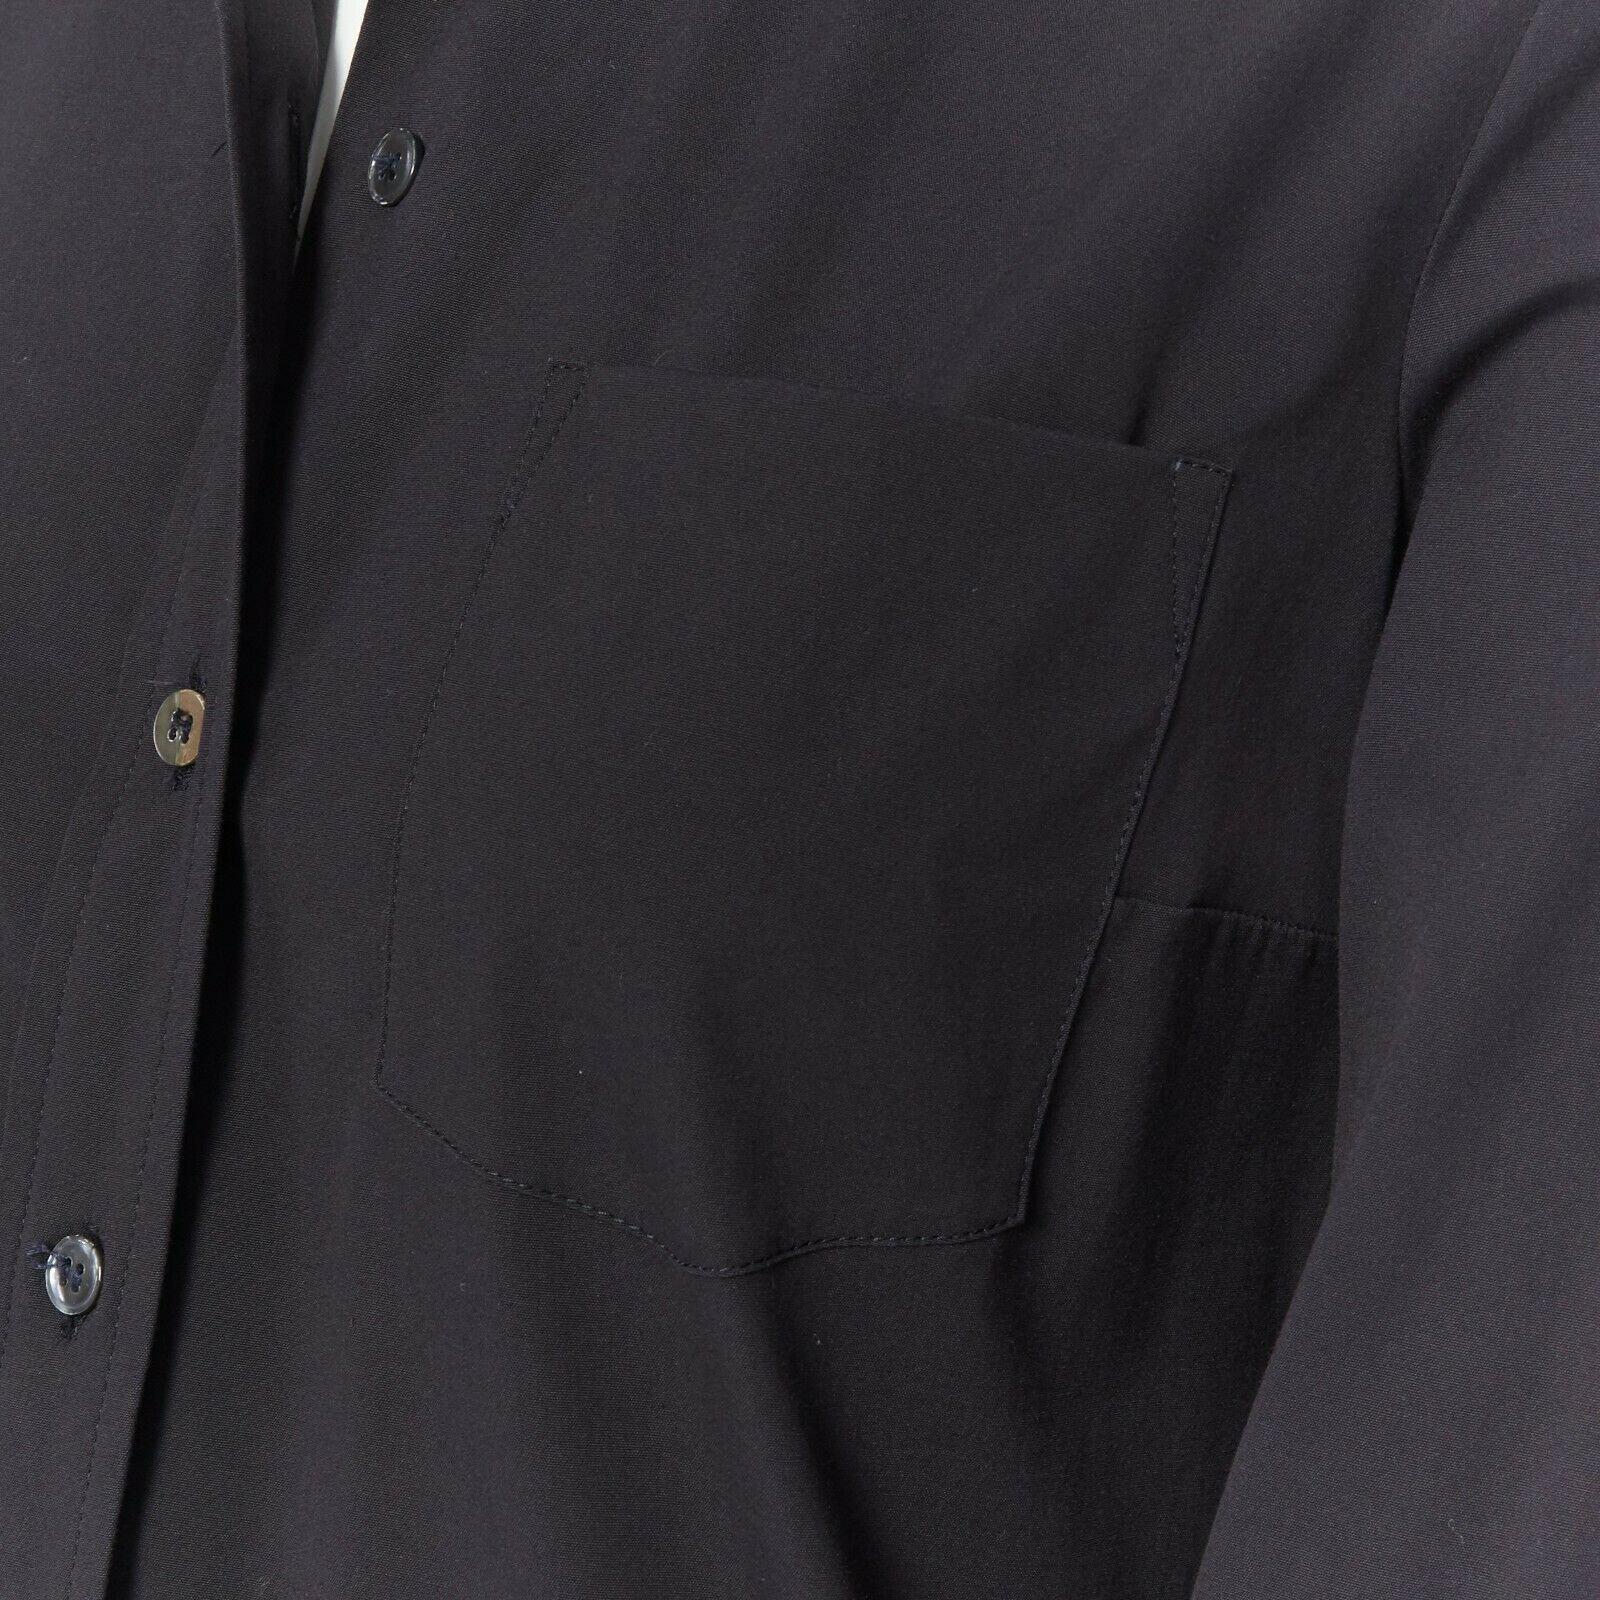 MICHAEL KORS black peak spread collar folded cuffs patch pocket long shirt US0 1